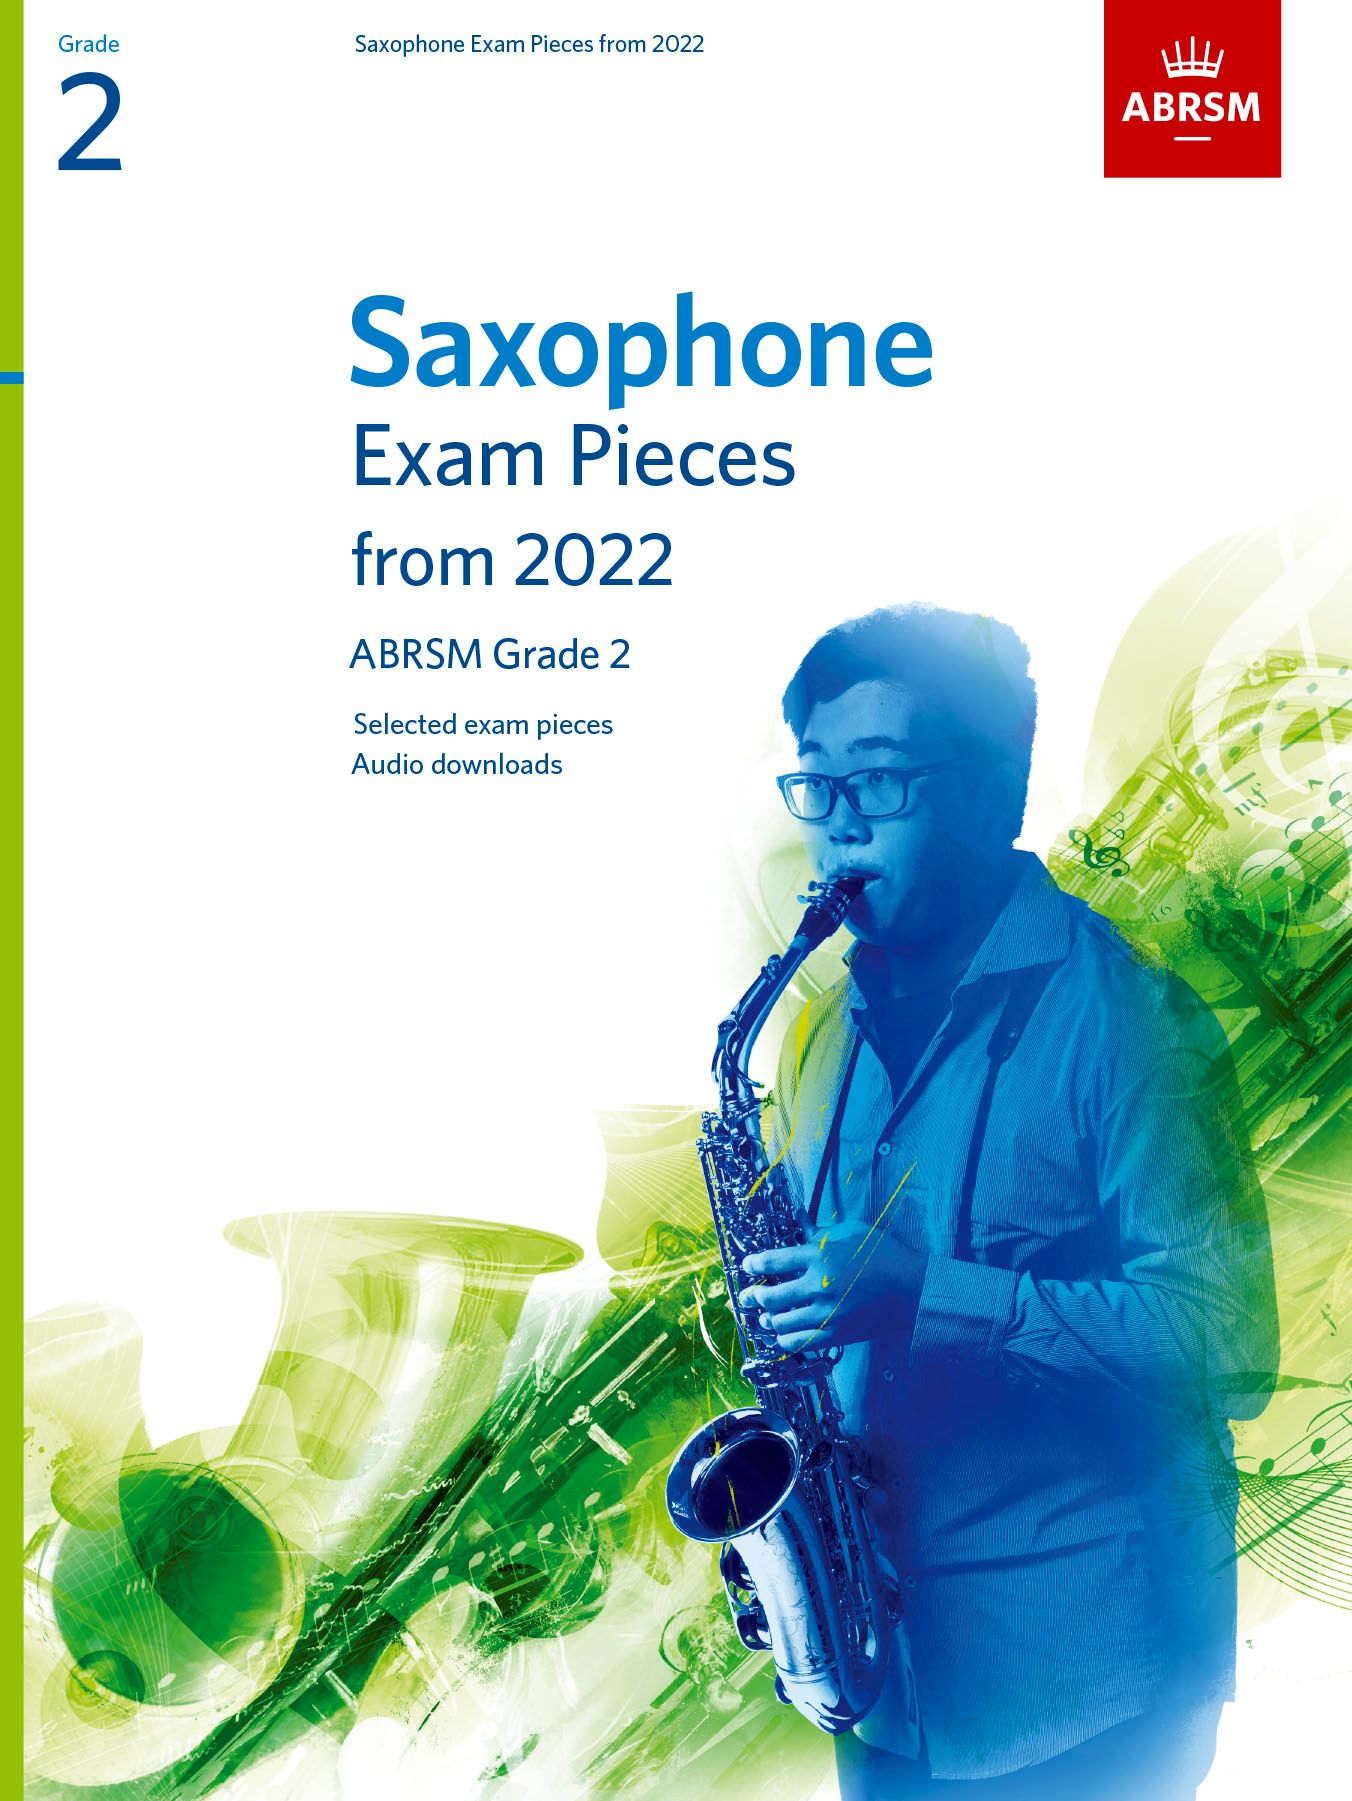 ABRSM Saxophone Exam Pieces from 2022, Grade 2